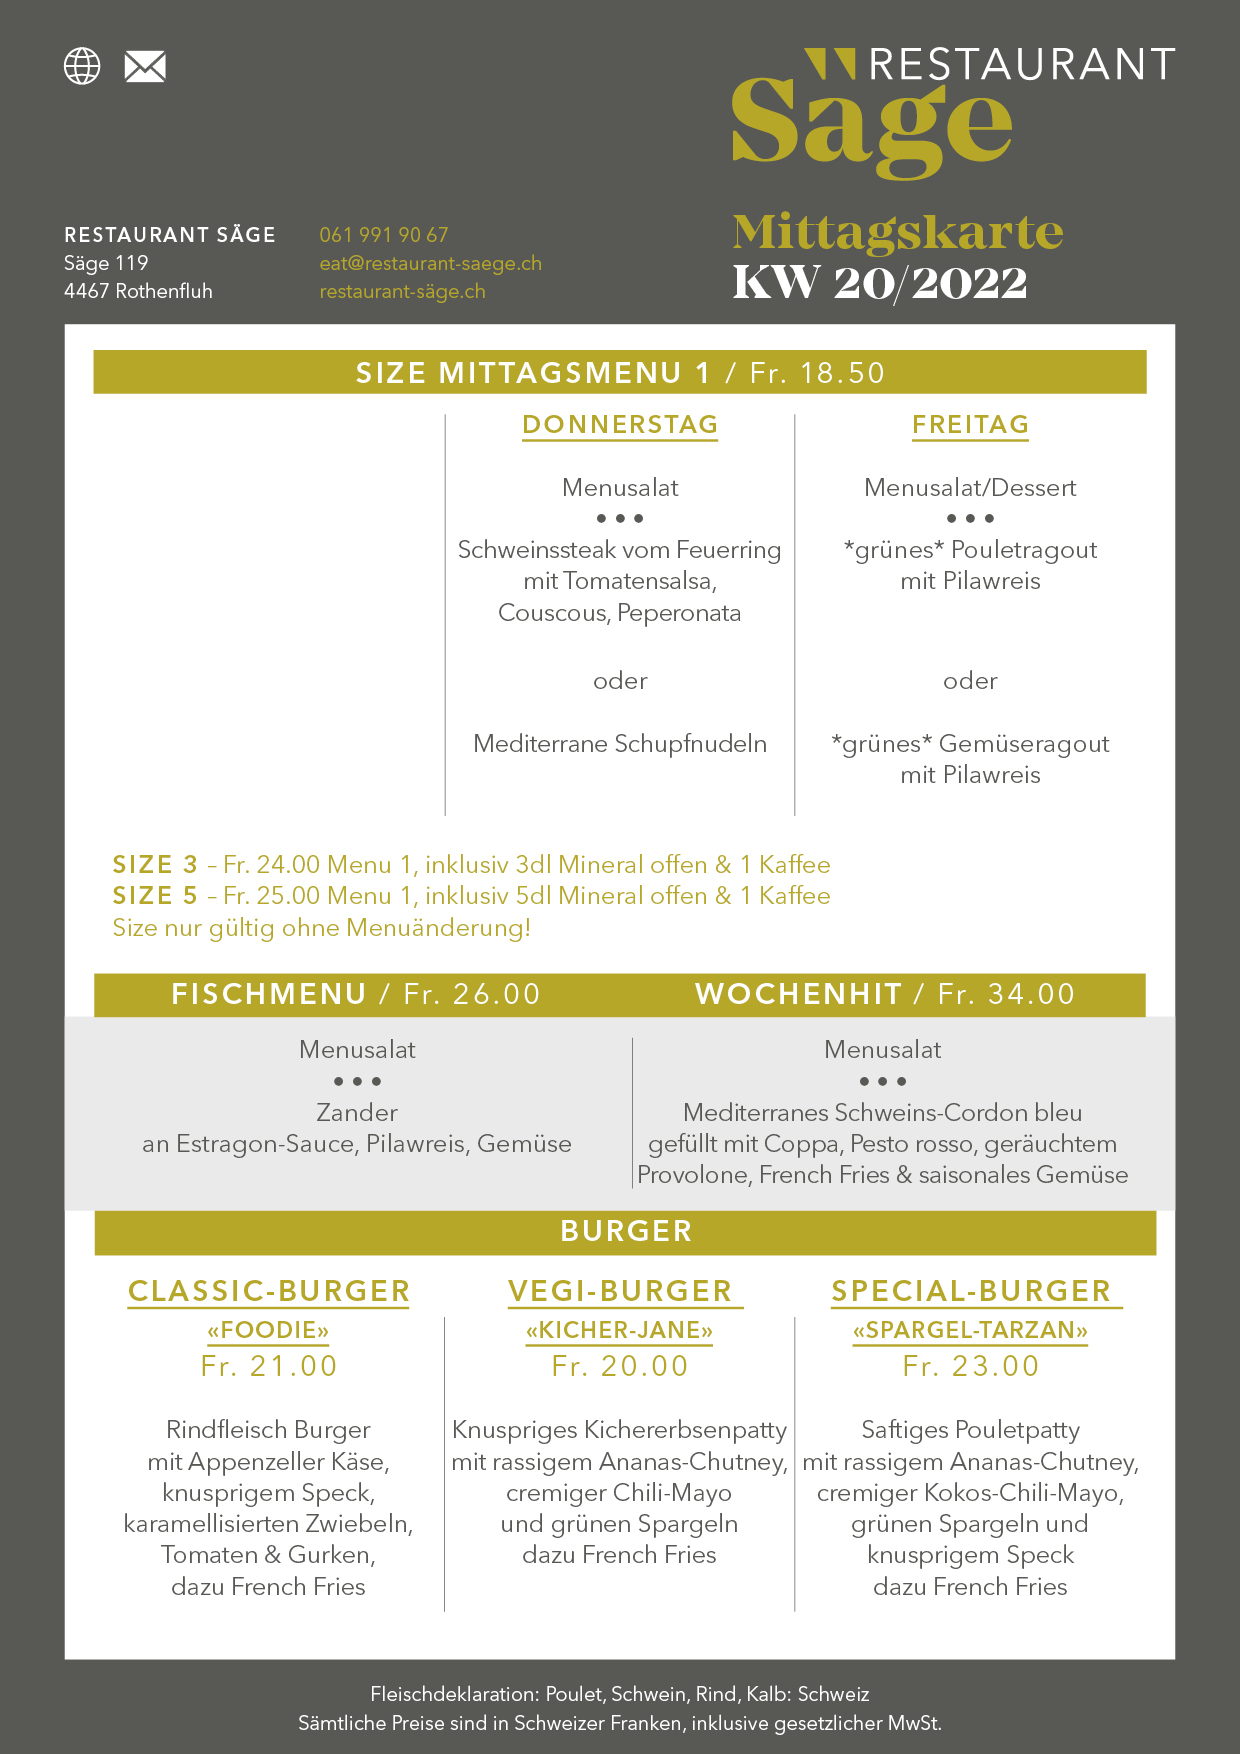 restaurant saege mittagskarte KW20 2022